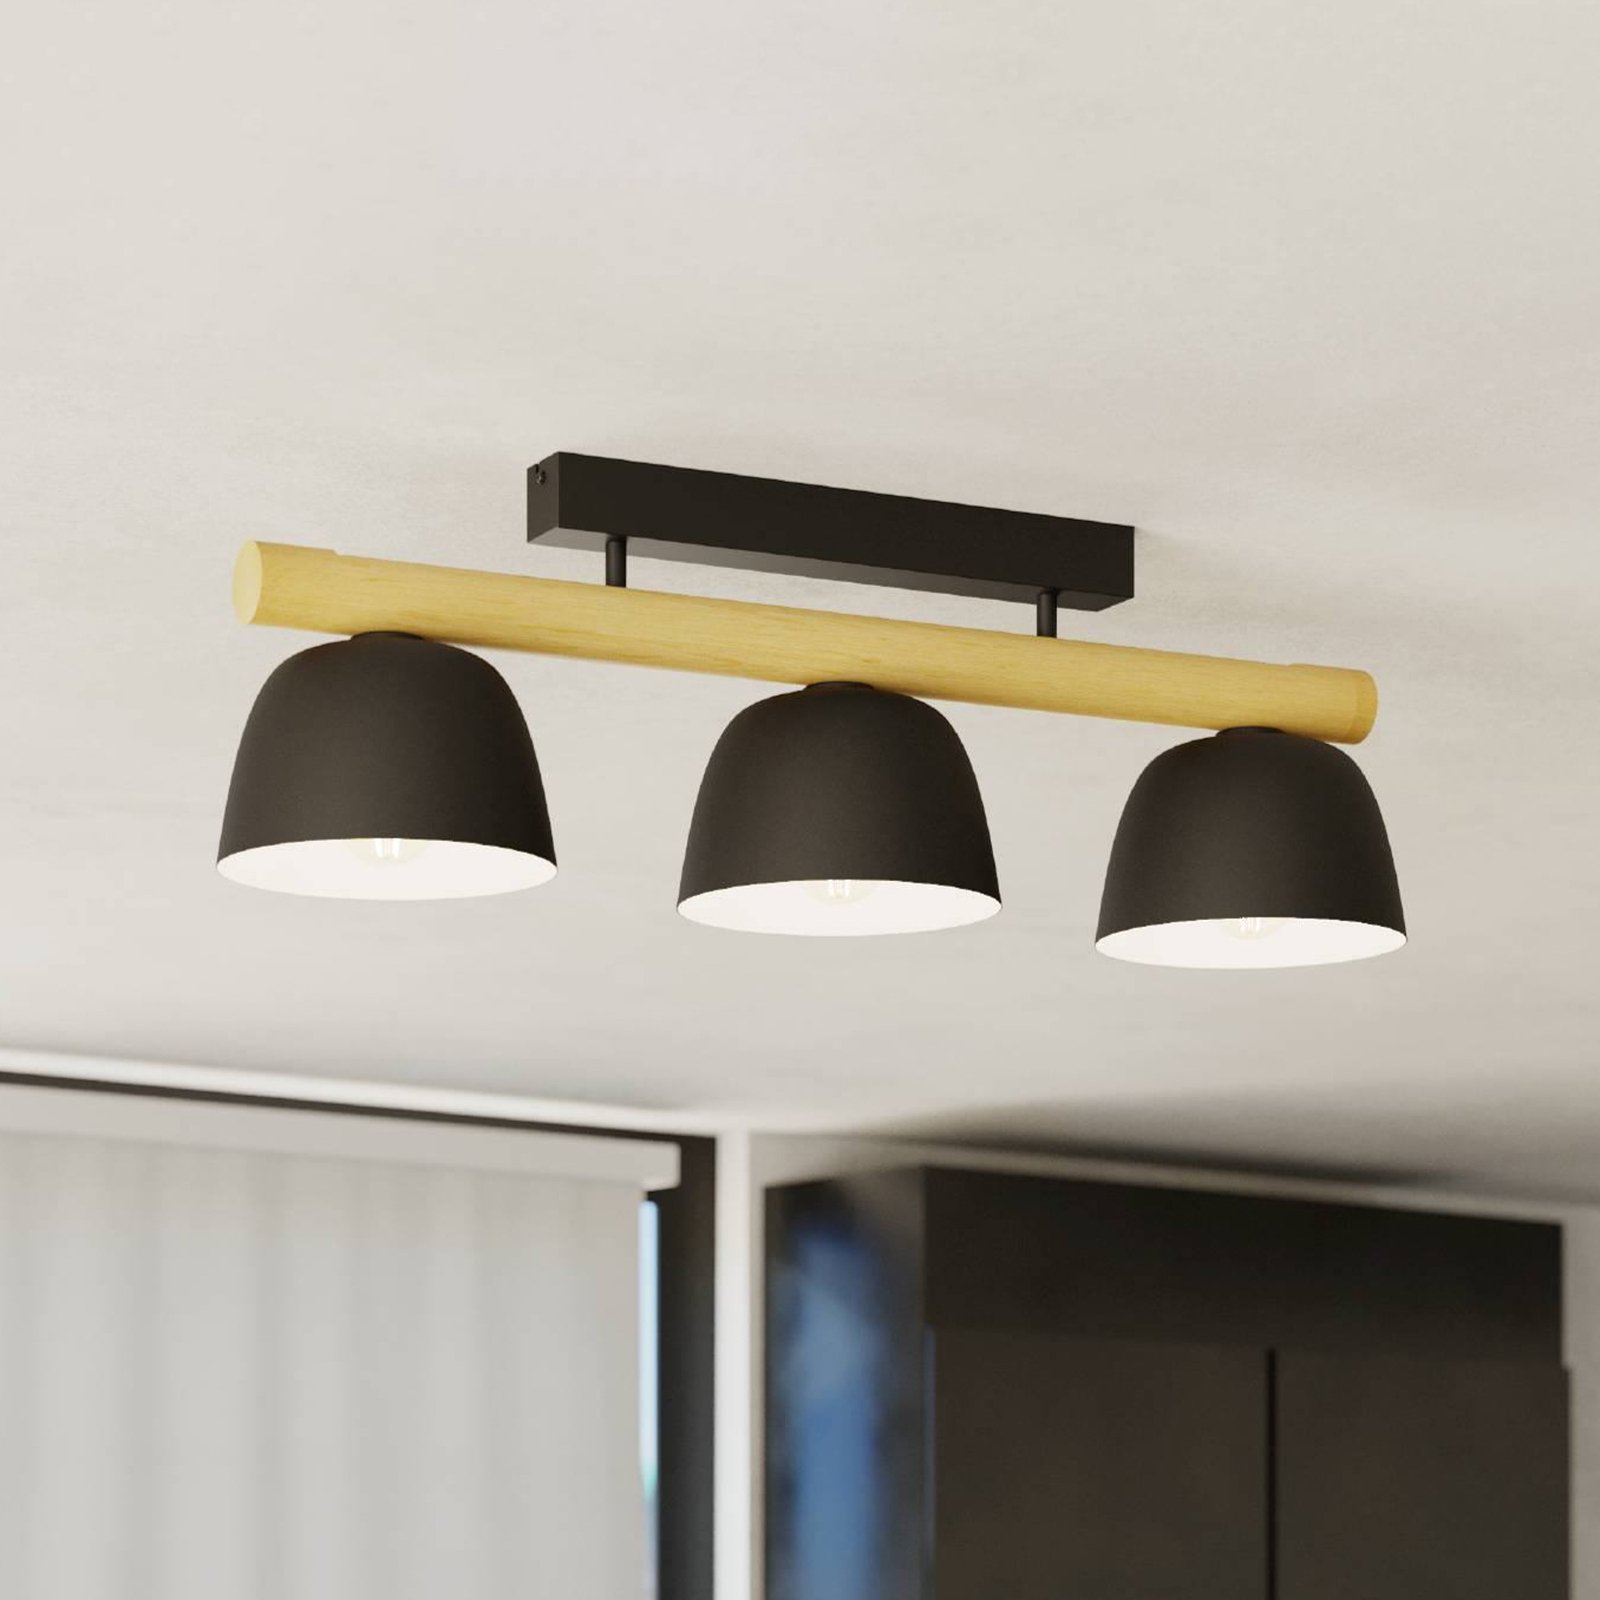 Sherburn plafondlamp, lengte 80 cm, zwart/bruin, 3-lamps.